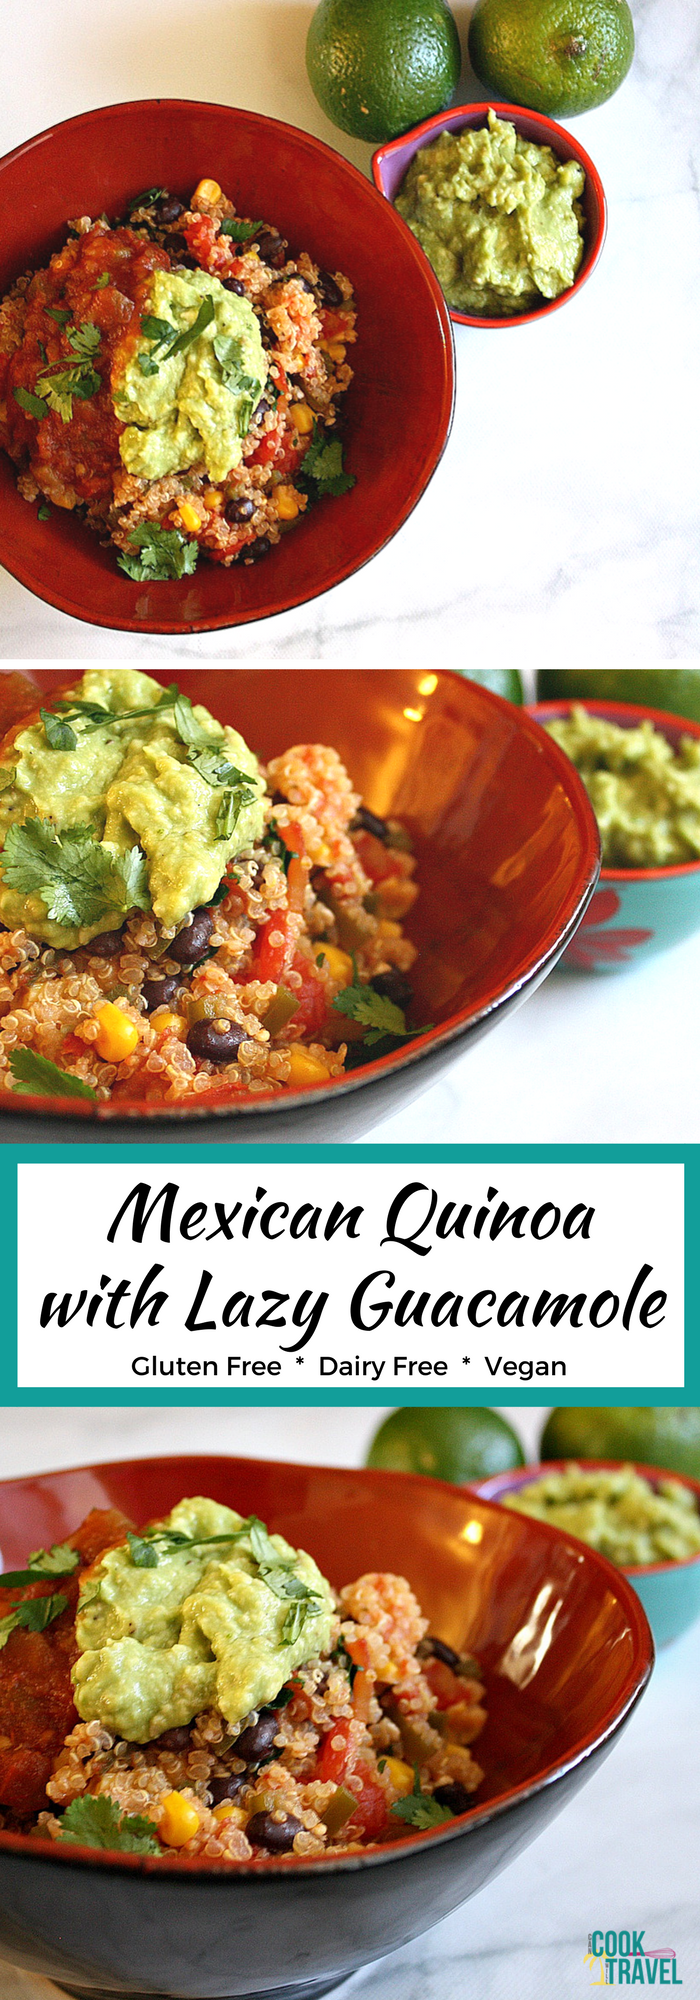 Mexican Quinoa with Lazy Guacamole